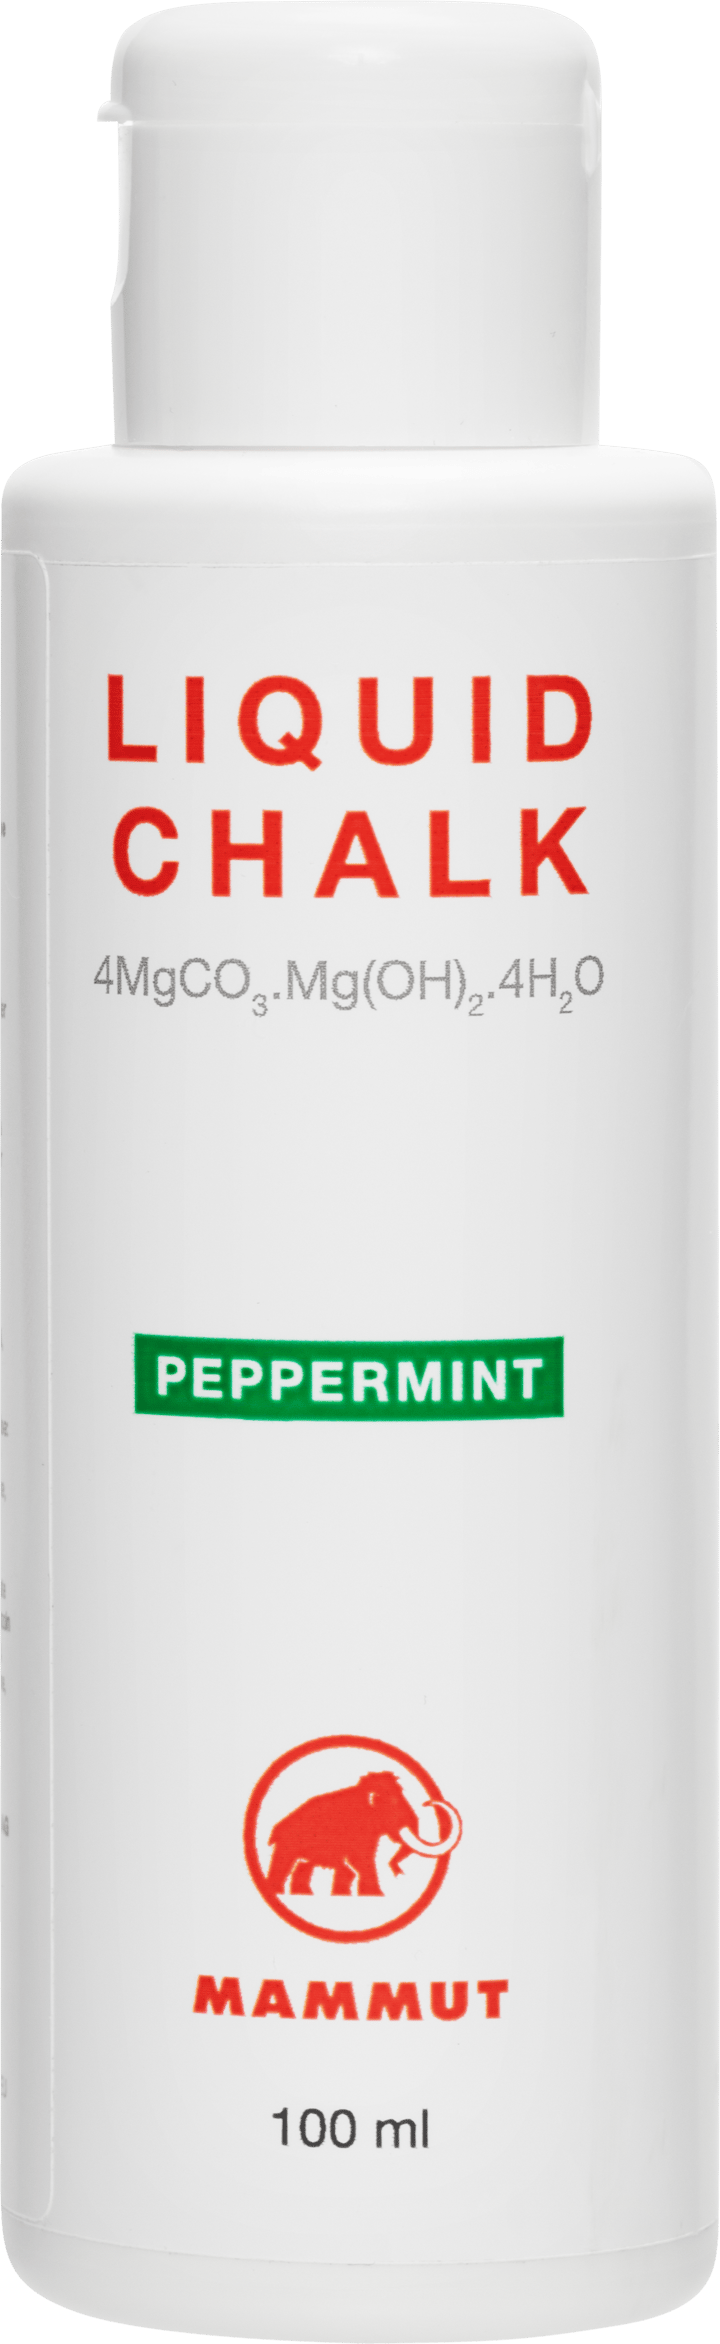 Liquid Chalk Peppermint 100 ml neutral Mammut